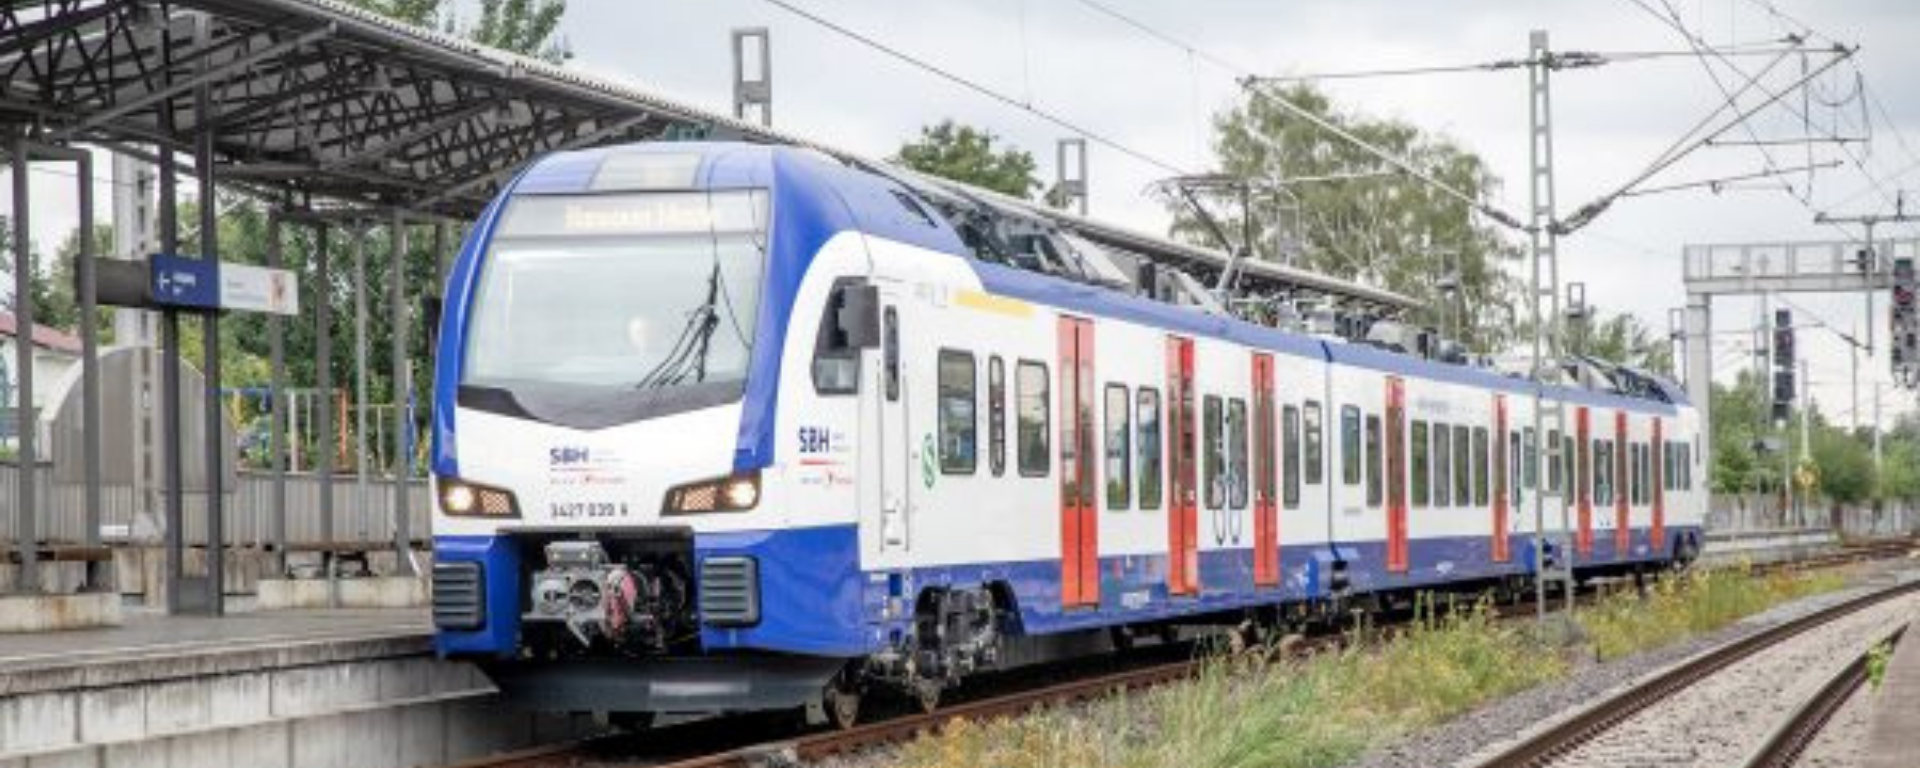 train-transdev-germany